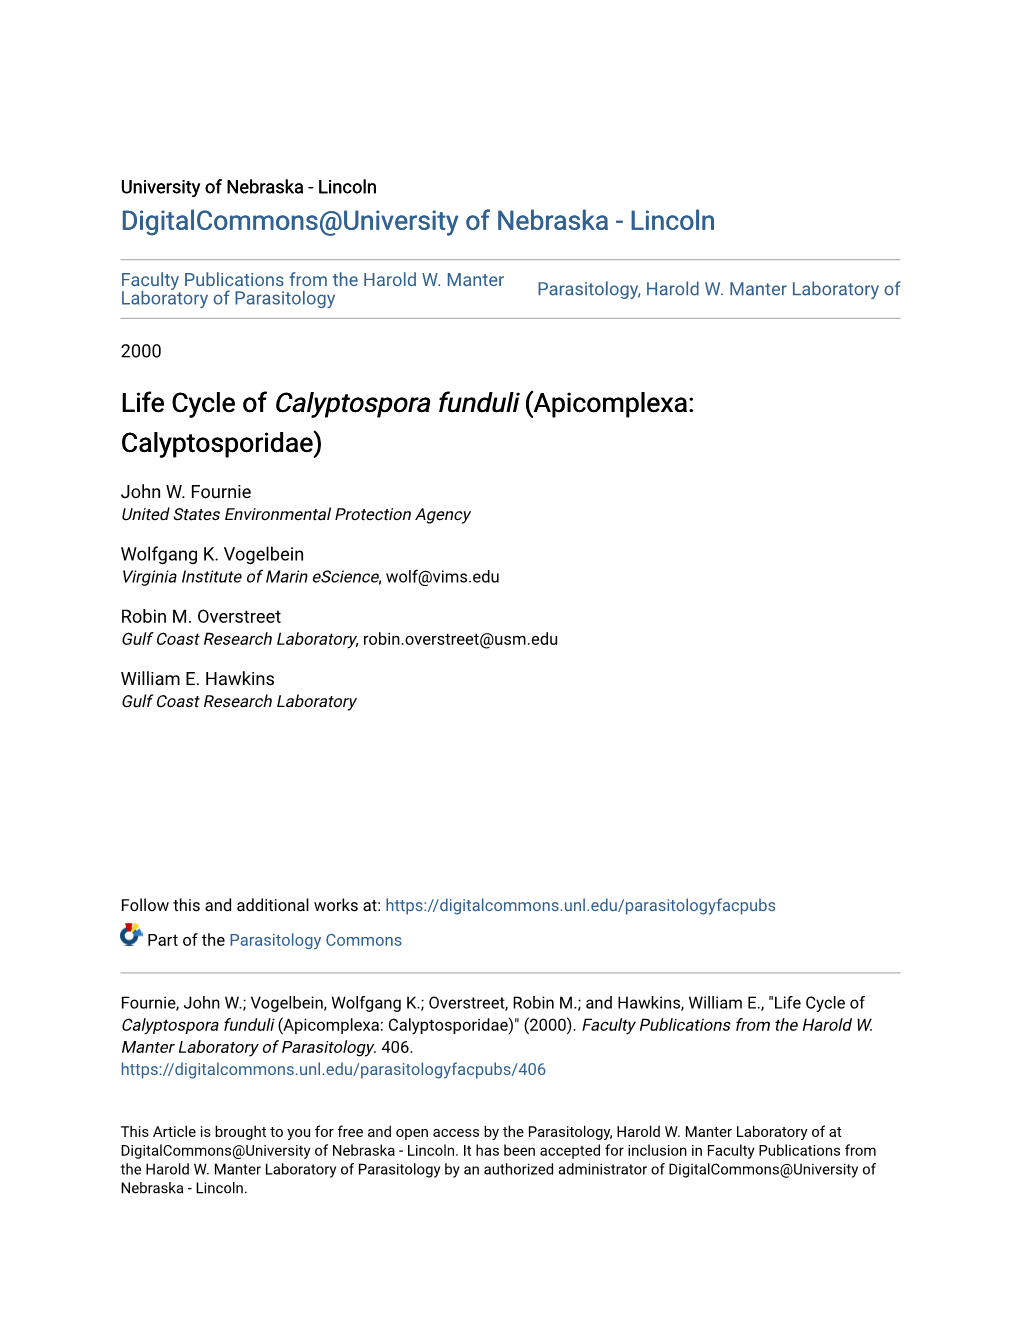 Life Cycle of Calyptospora Funduli (Apicomplexa: Calyptosporidae)